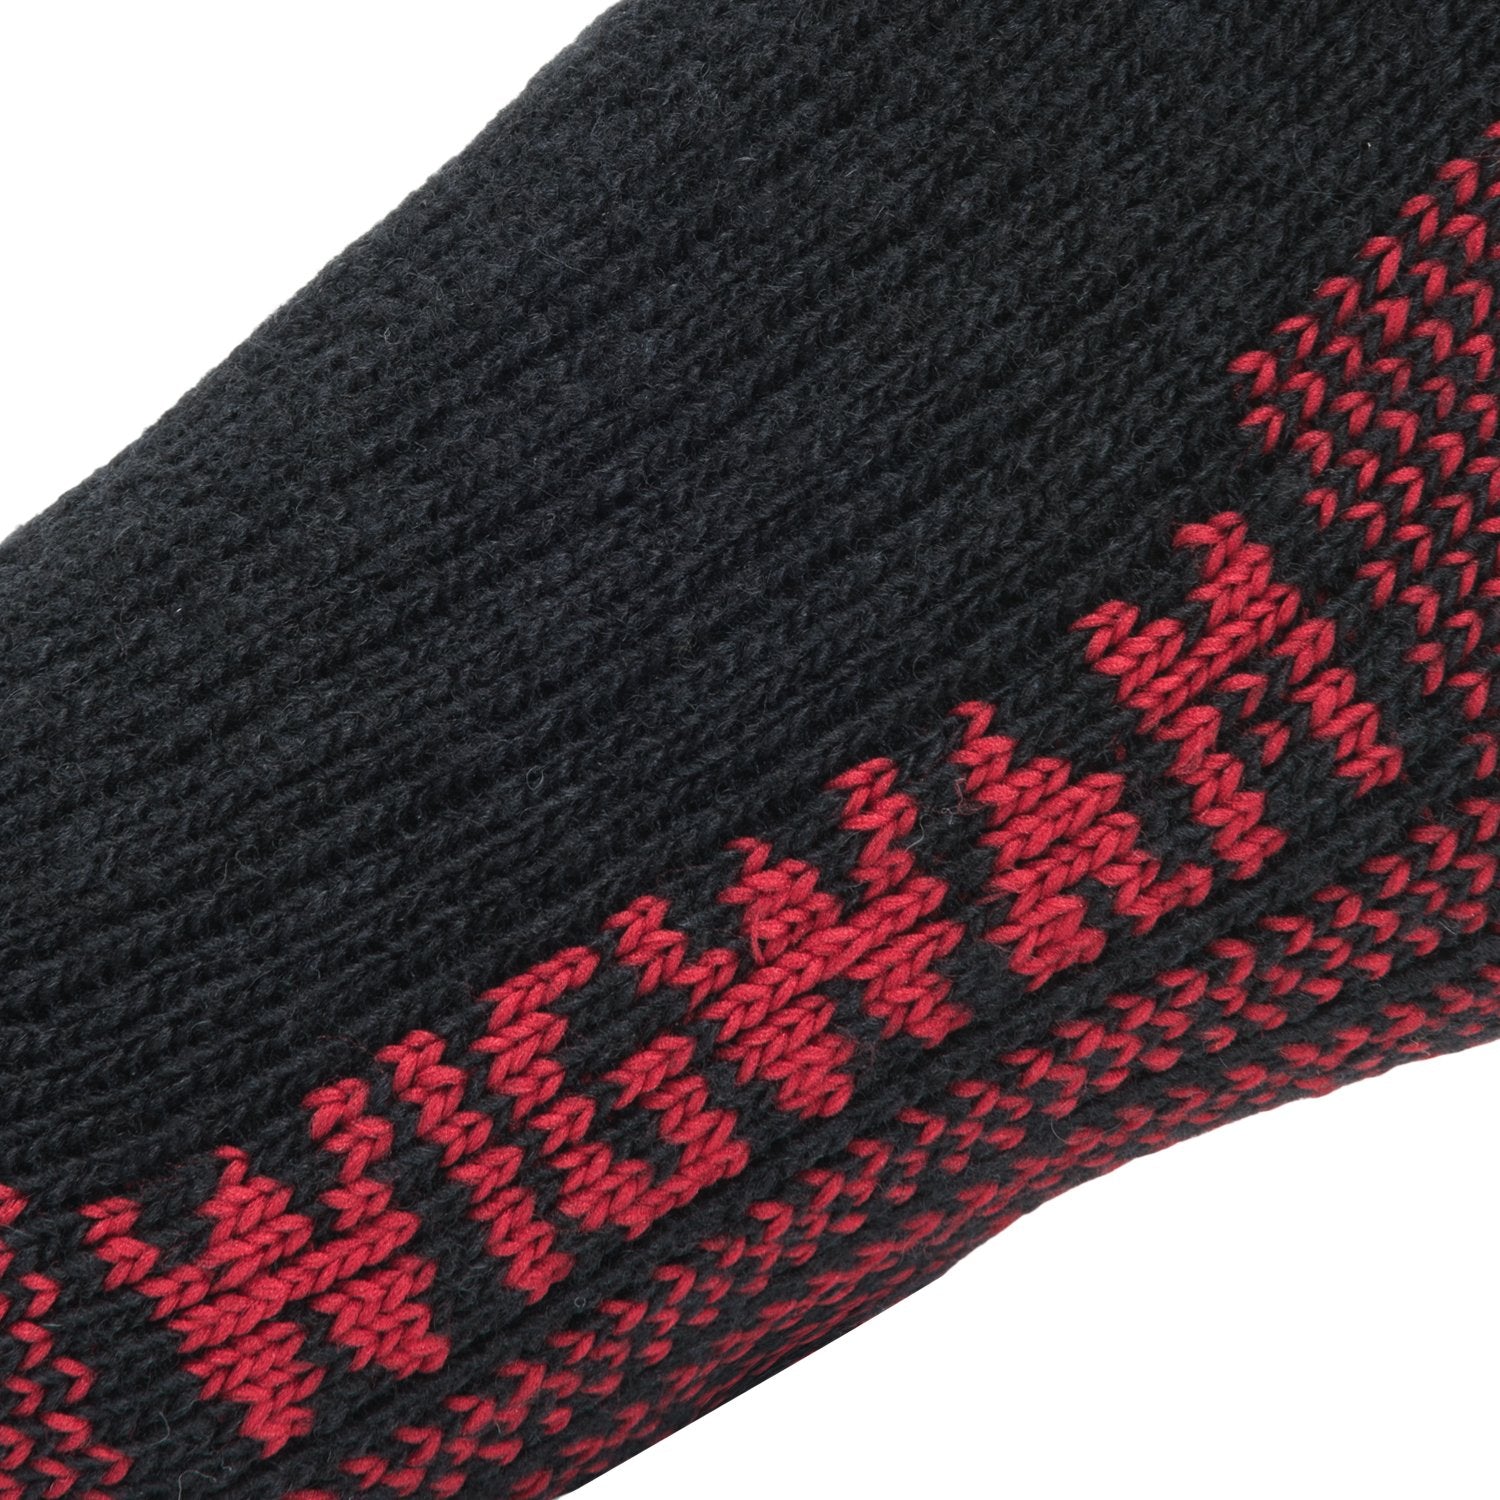 Canada II Heavyweight Wool Crew Sock - Black knit-in logo - made in The USA Wigwam Socks